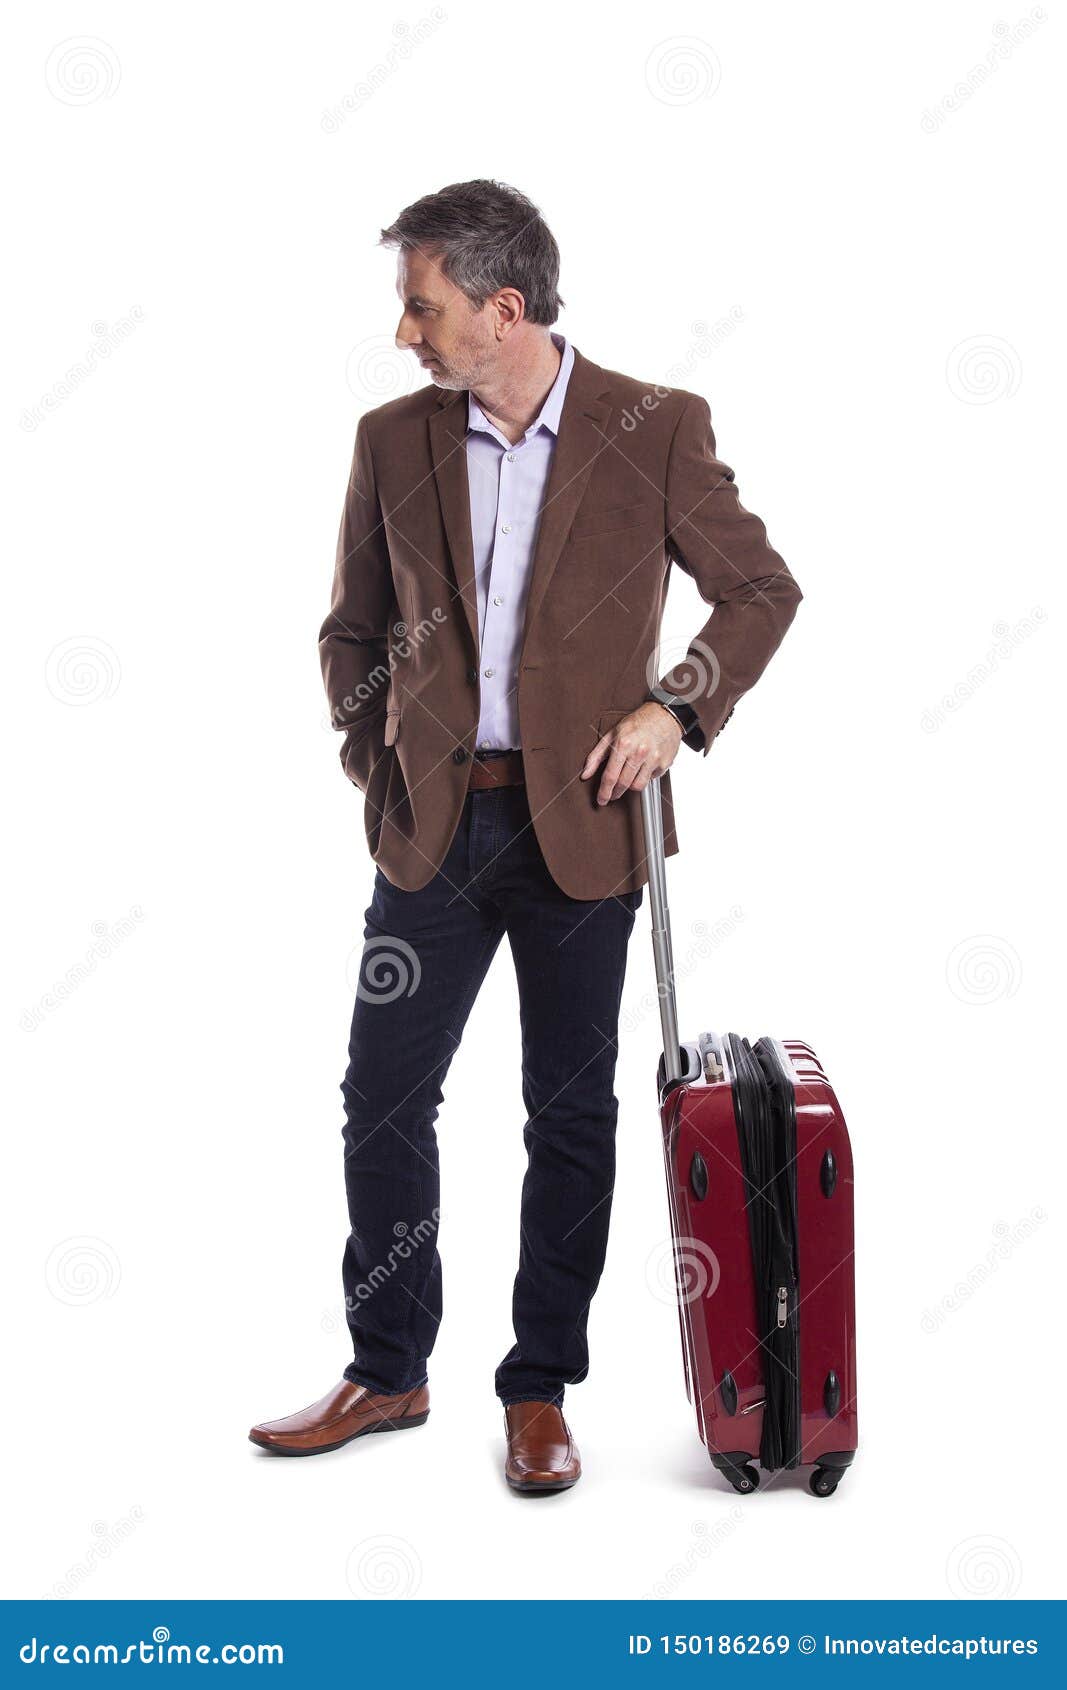 Traveling Businessman Waiting with Luggage Stock Image - Image of ...